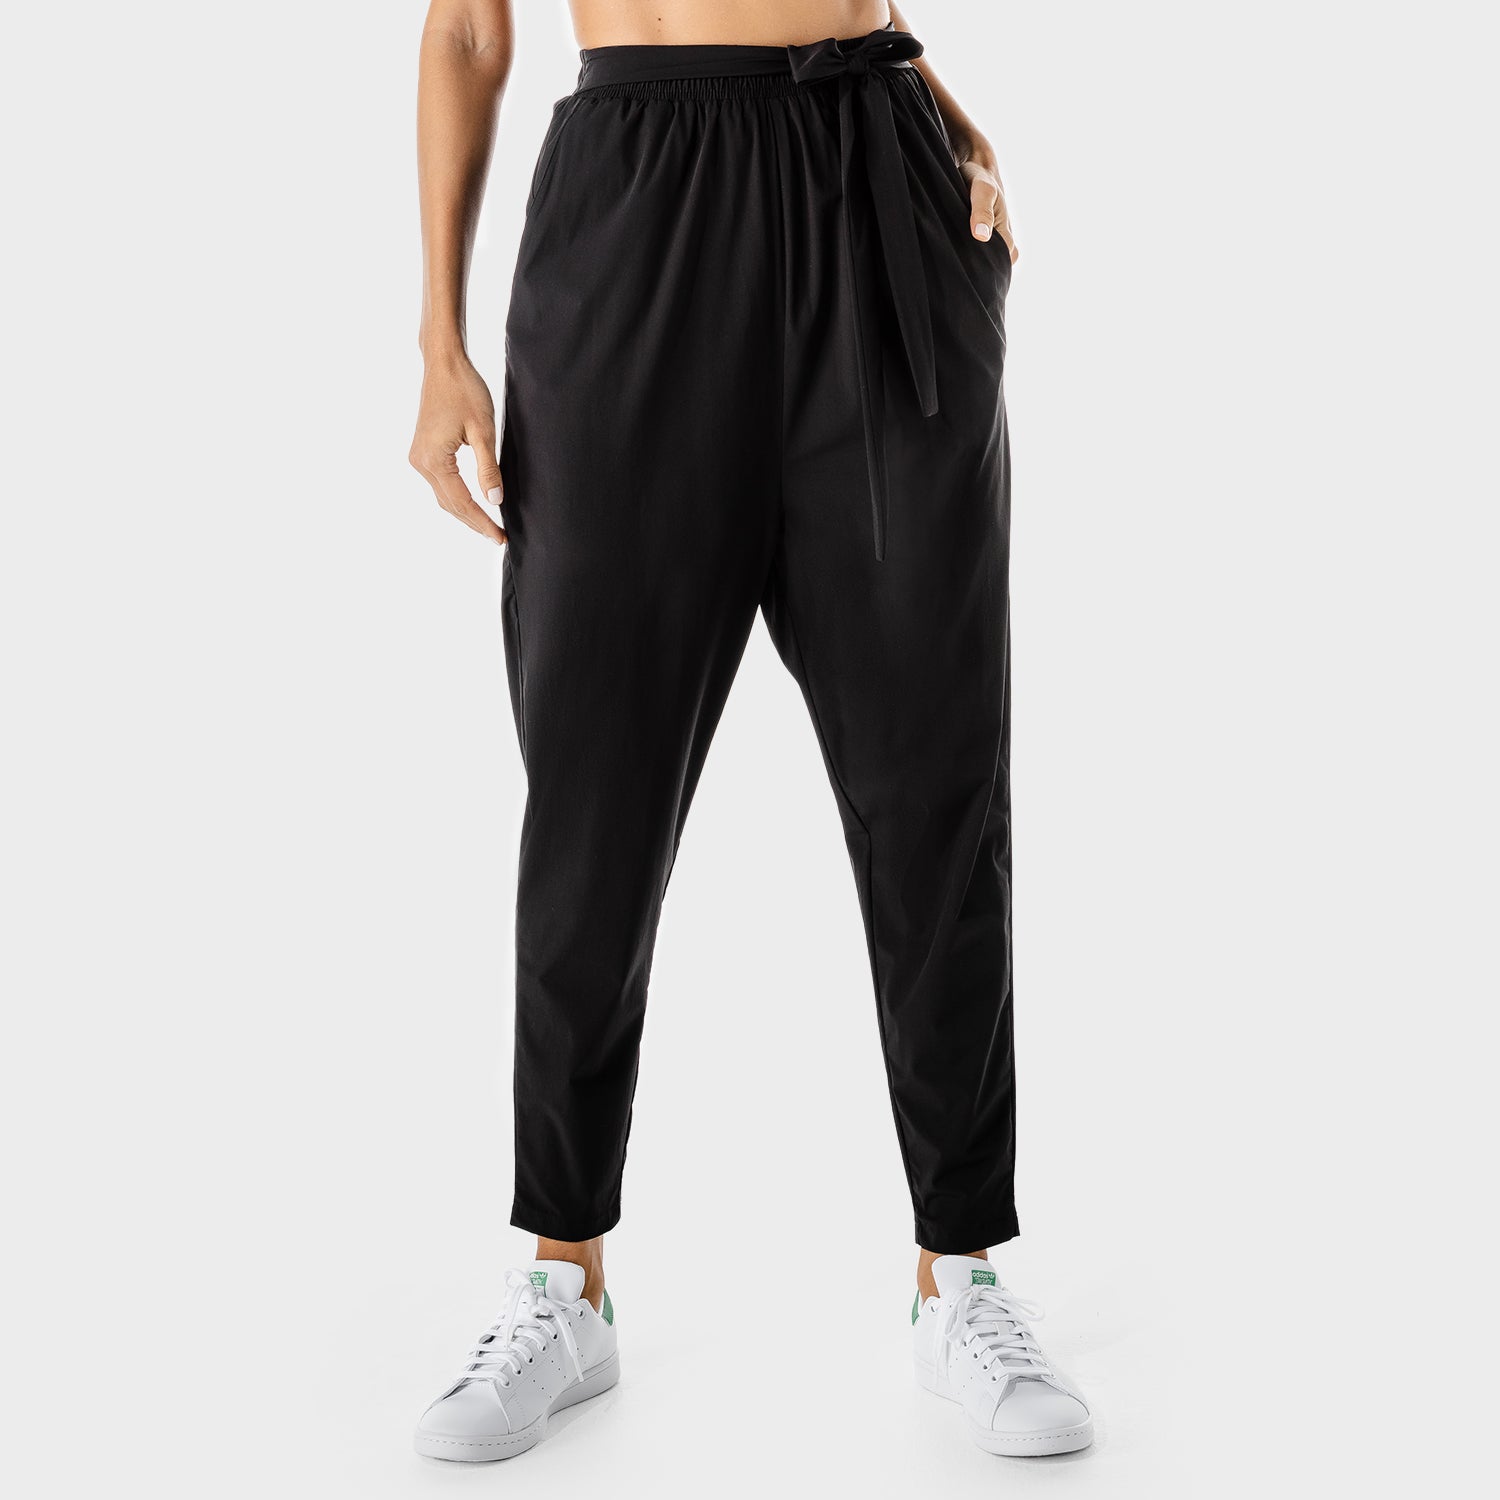 US, Women's Fitness - Wrap Pants - Black